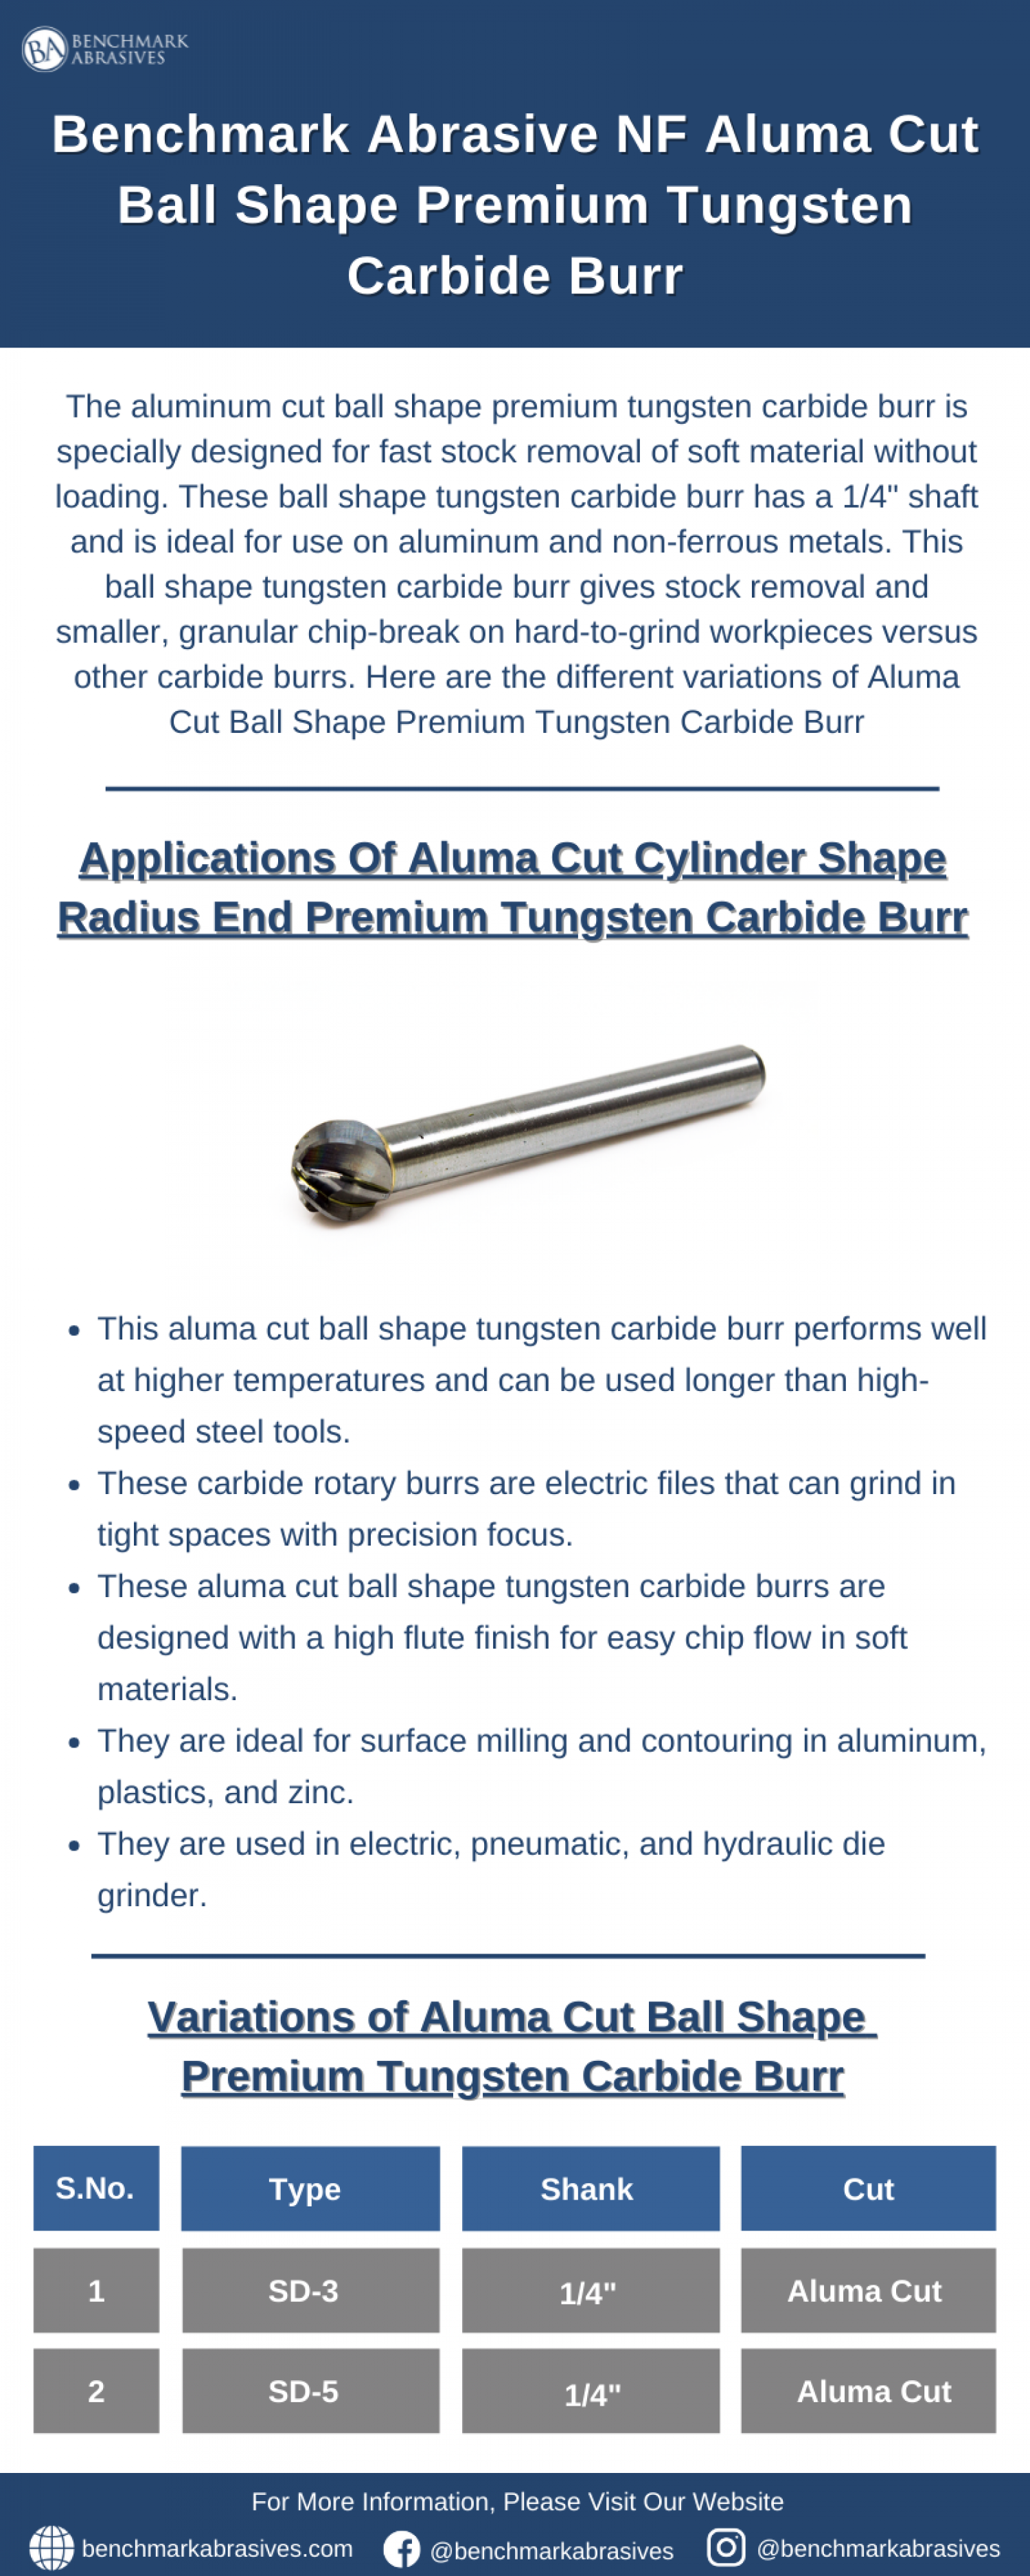 Aluma Cut Ball Shape Premium Tungsten Carbide Burr Infographic